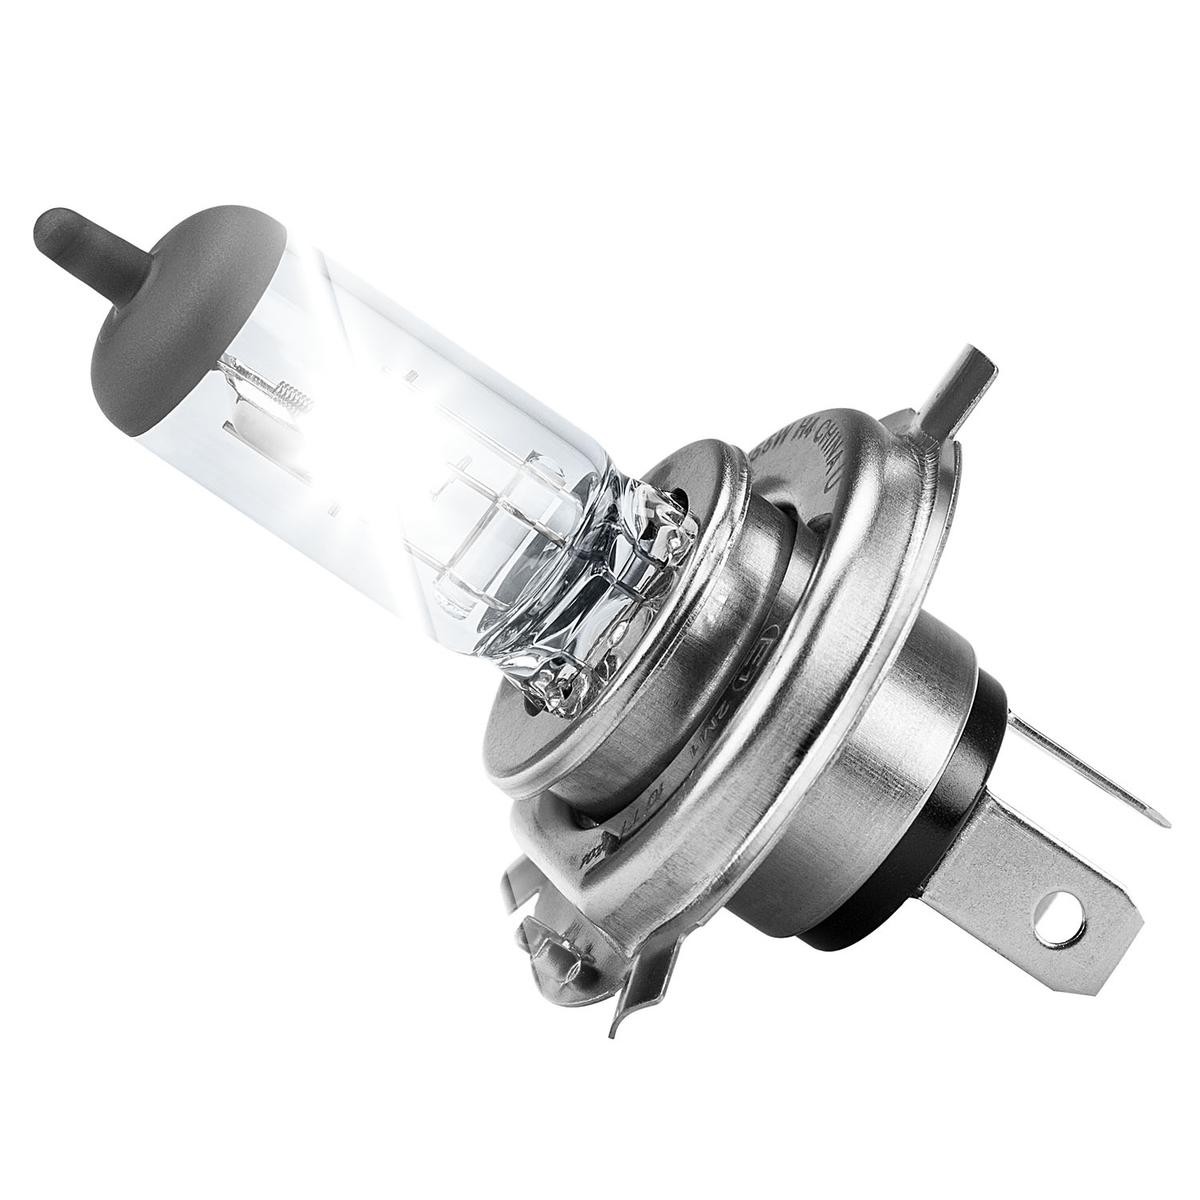 VisionPlus car headlight bulb 12972VPB1